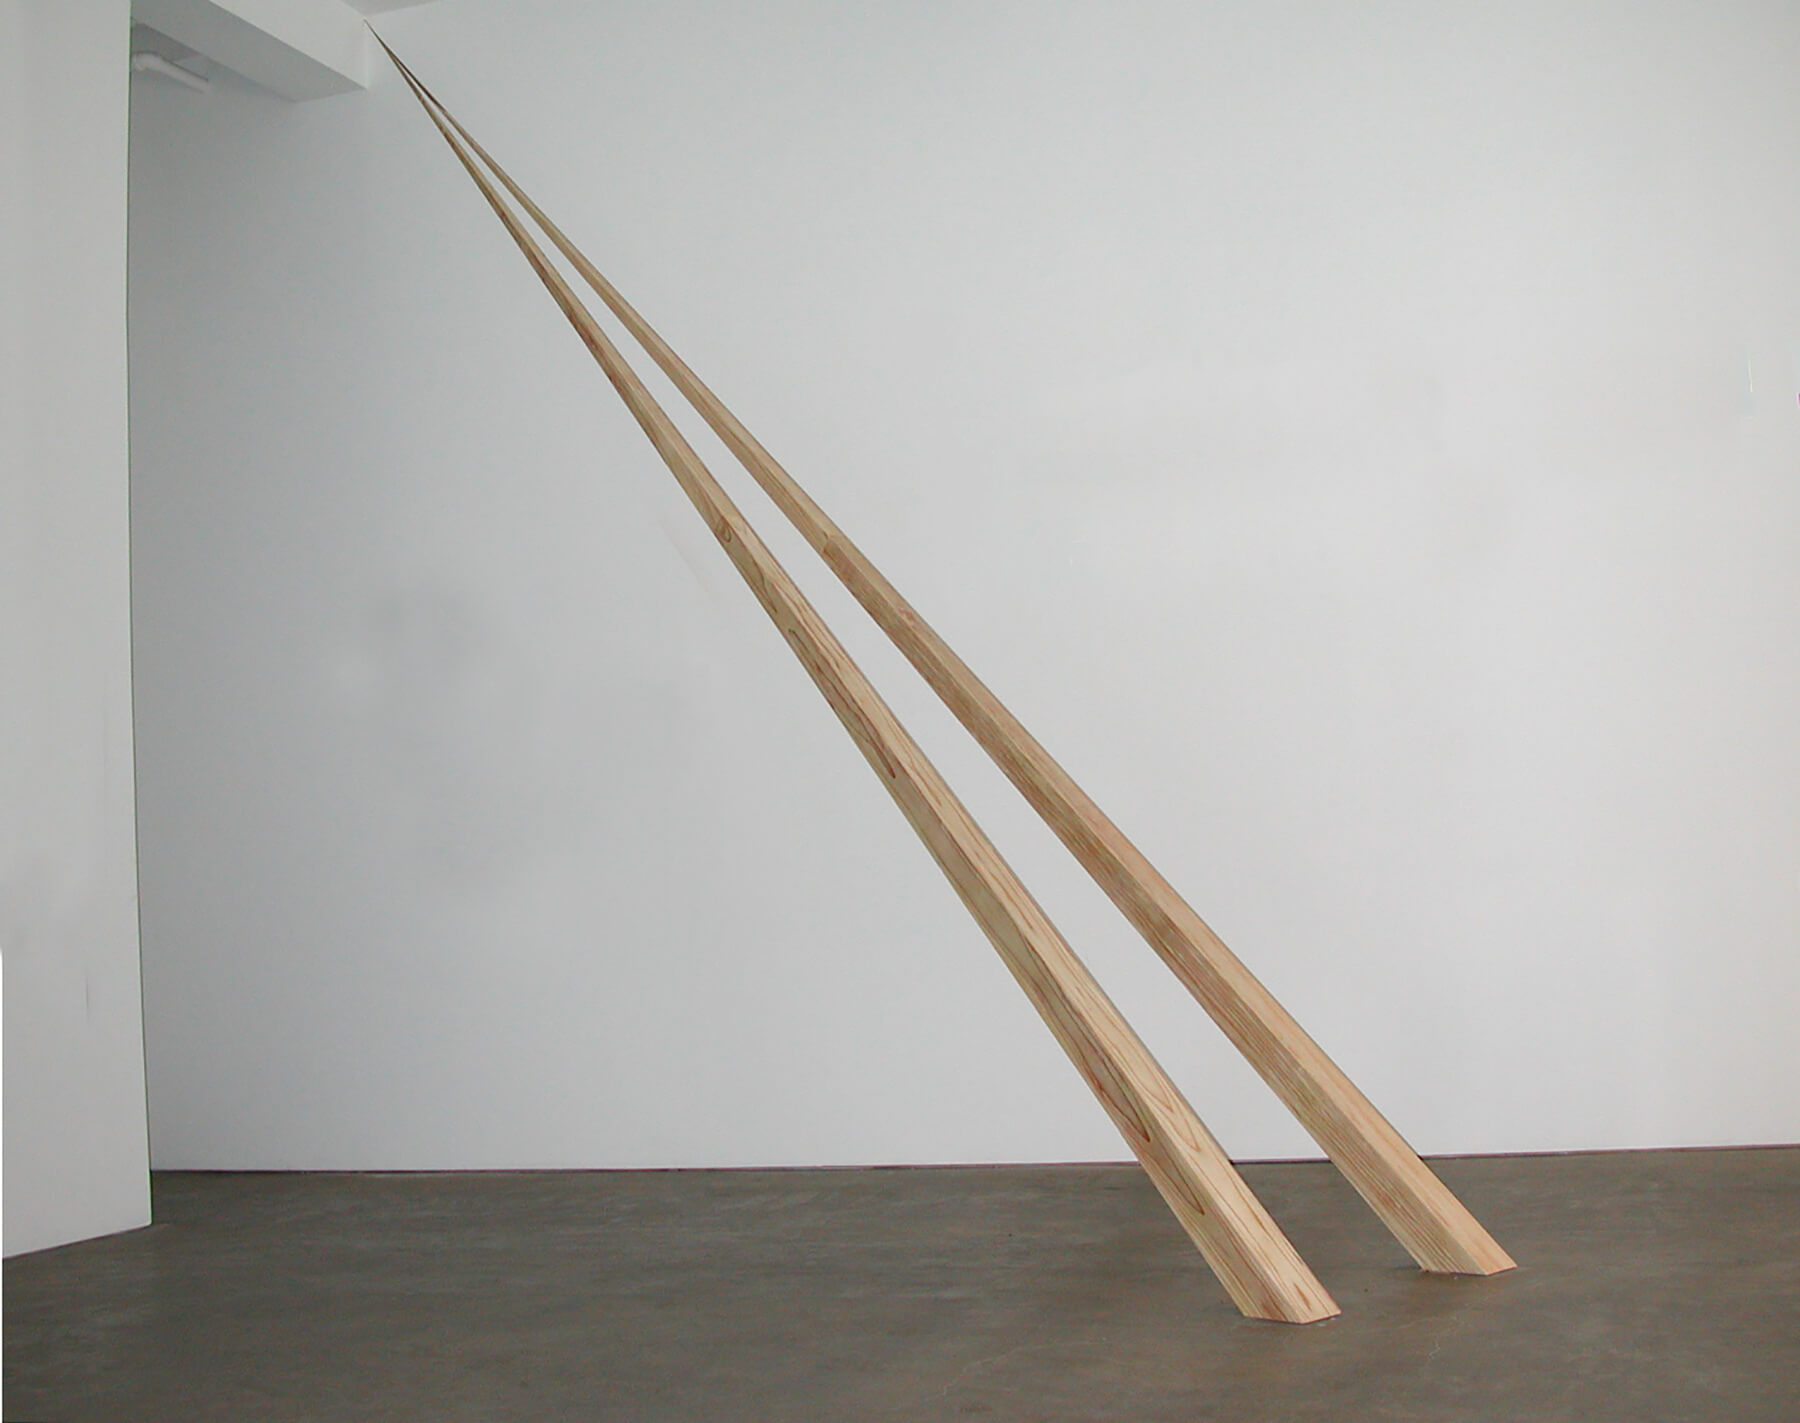 Wood, 5 in x 5 in x 22 ft, 2004